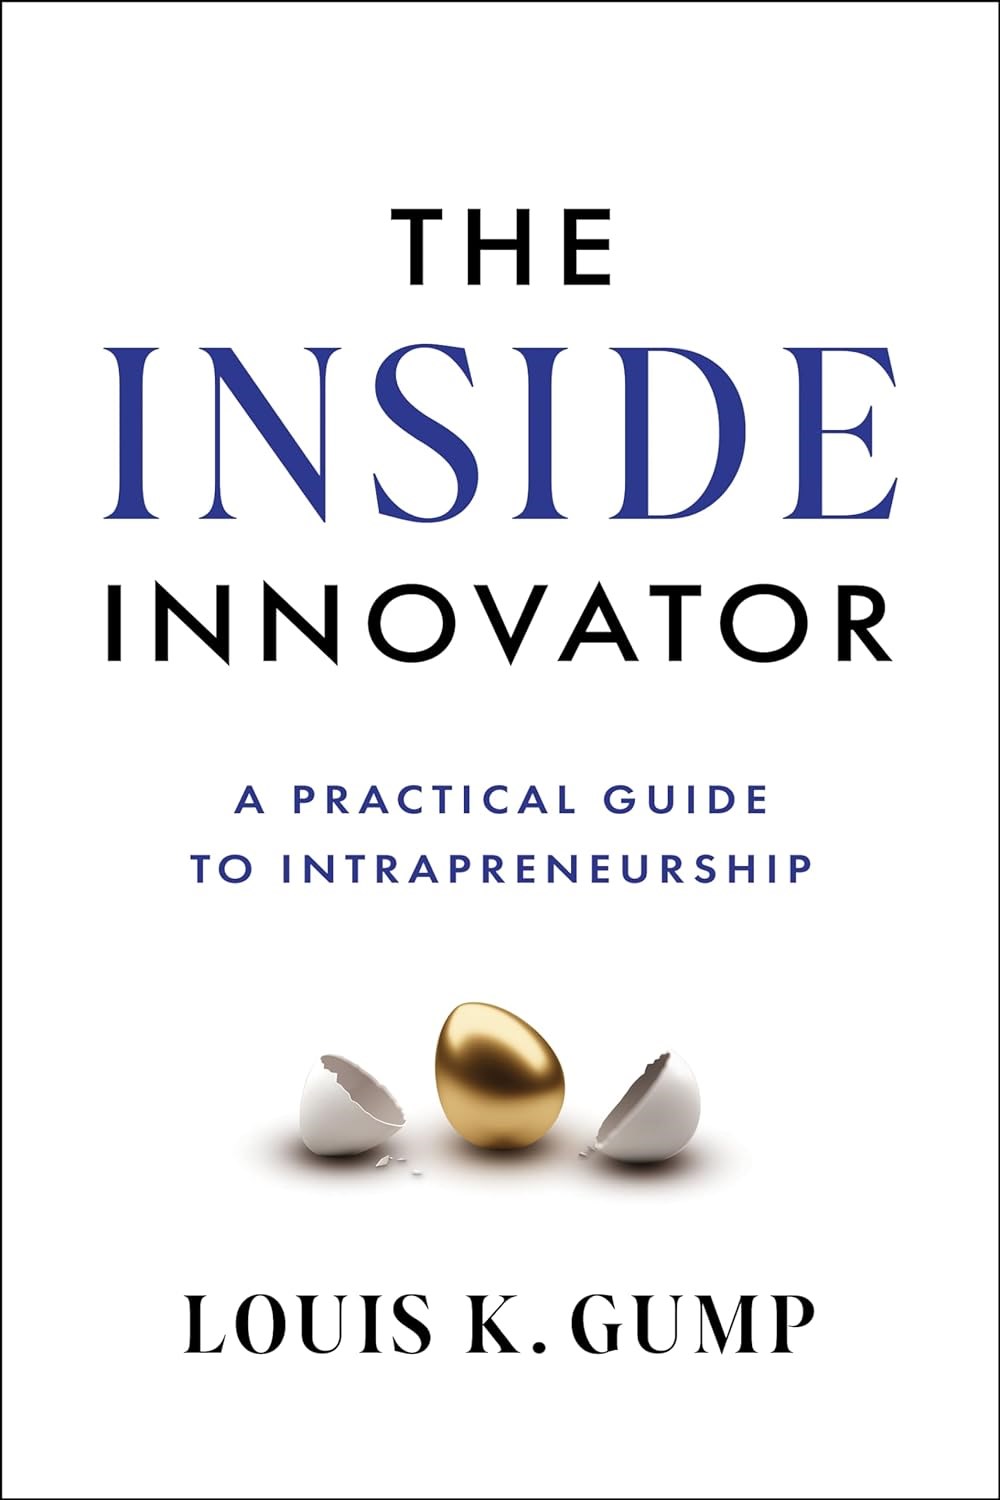 Inside Innovator: A Practical Guide to Intrapreneurship